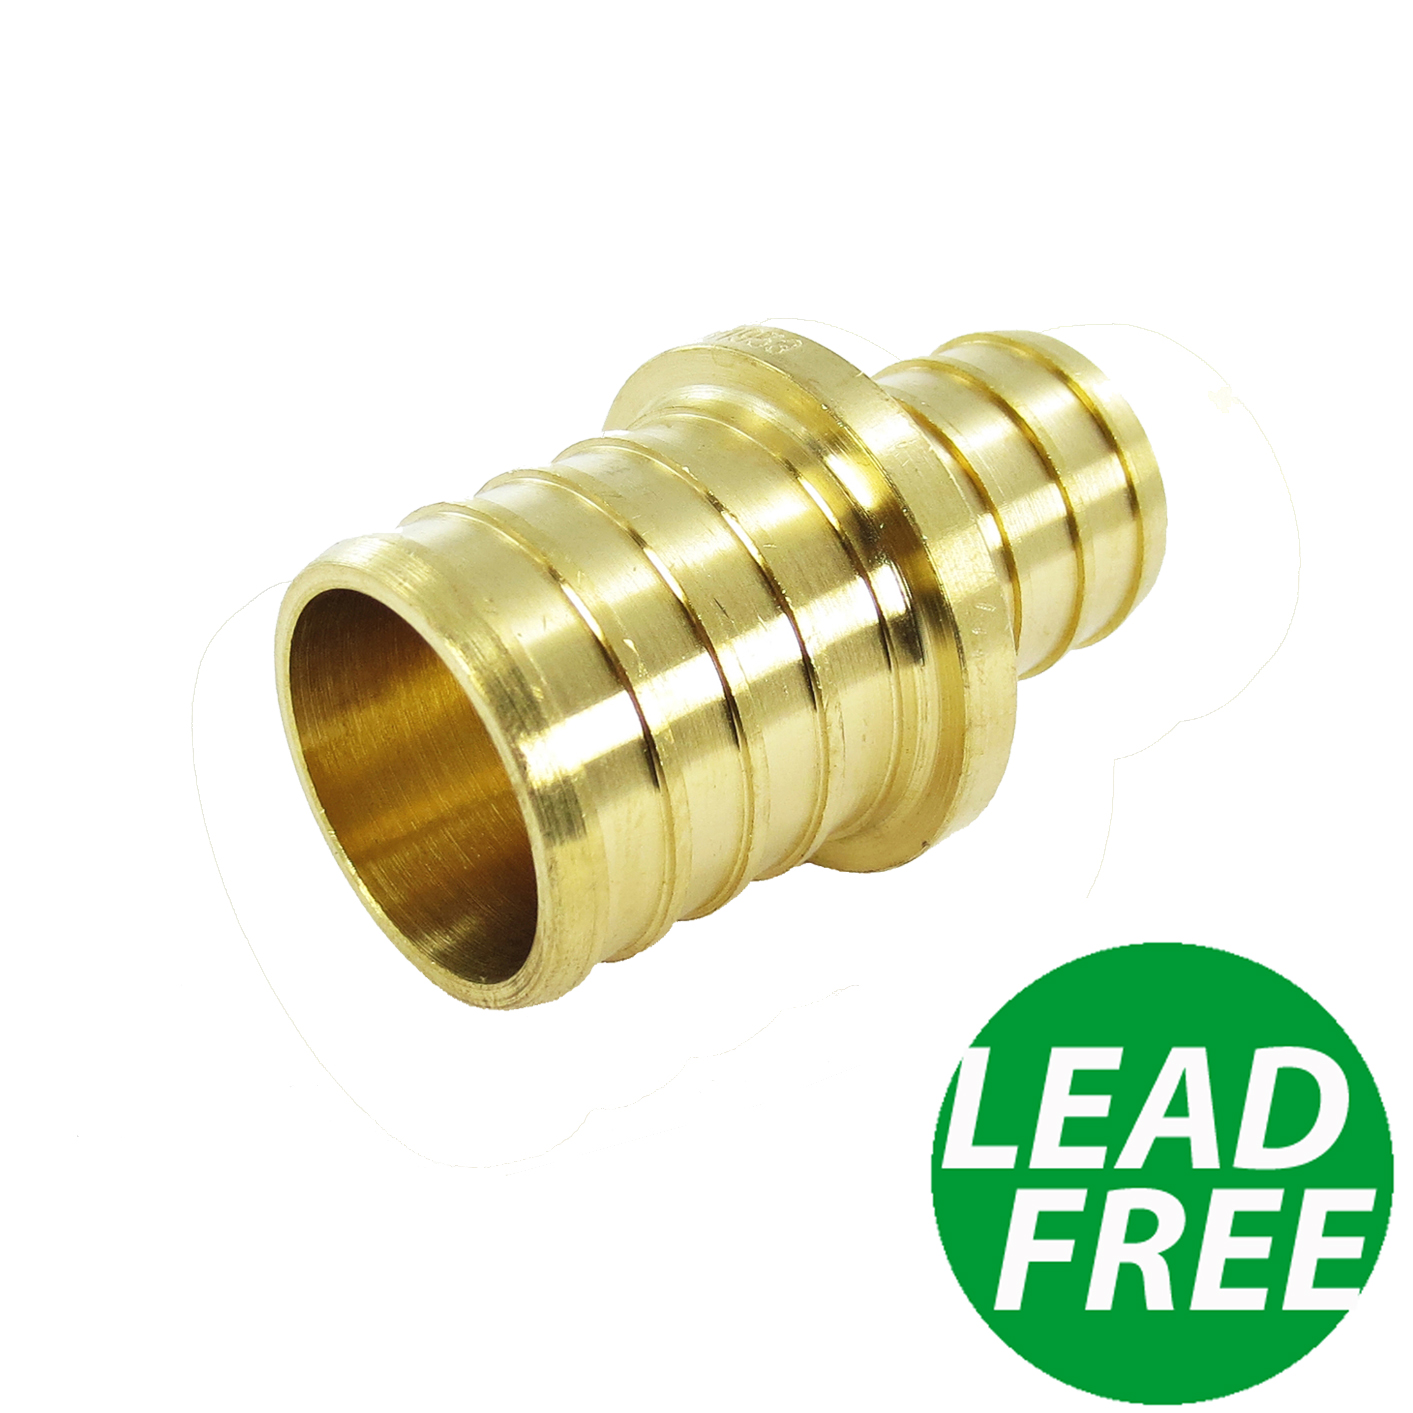 Lead Free EFIELD 1" PEX x 3/4" Male NPT Threaded Adapters Crimp Brass Fittings 